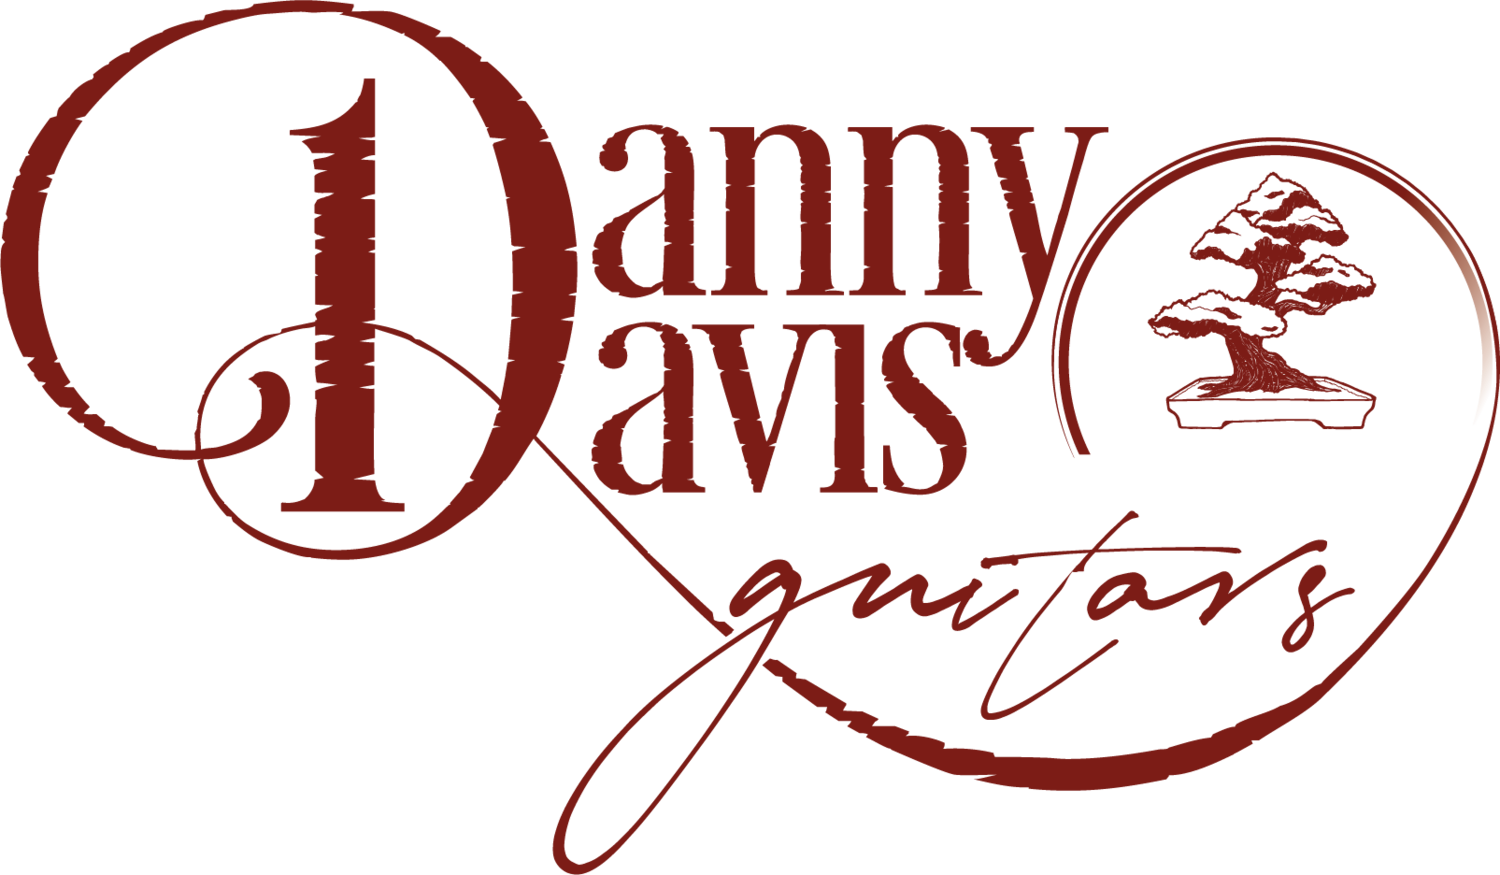 Danny Davis Guitars